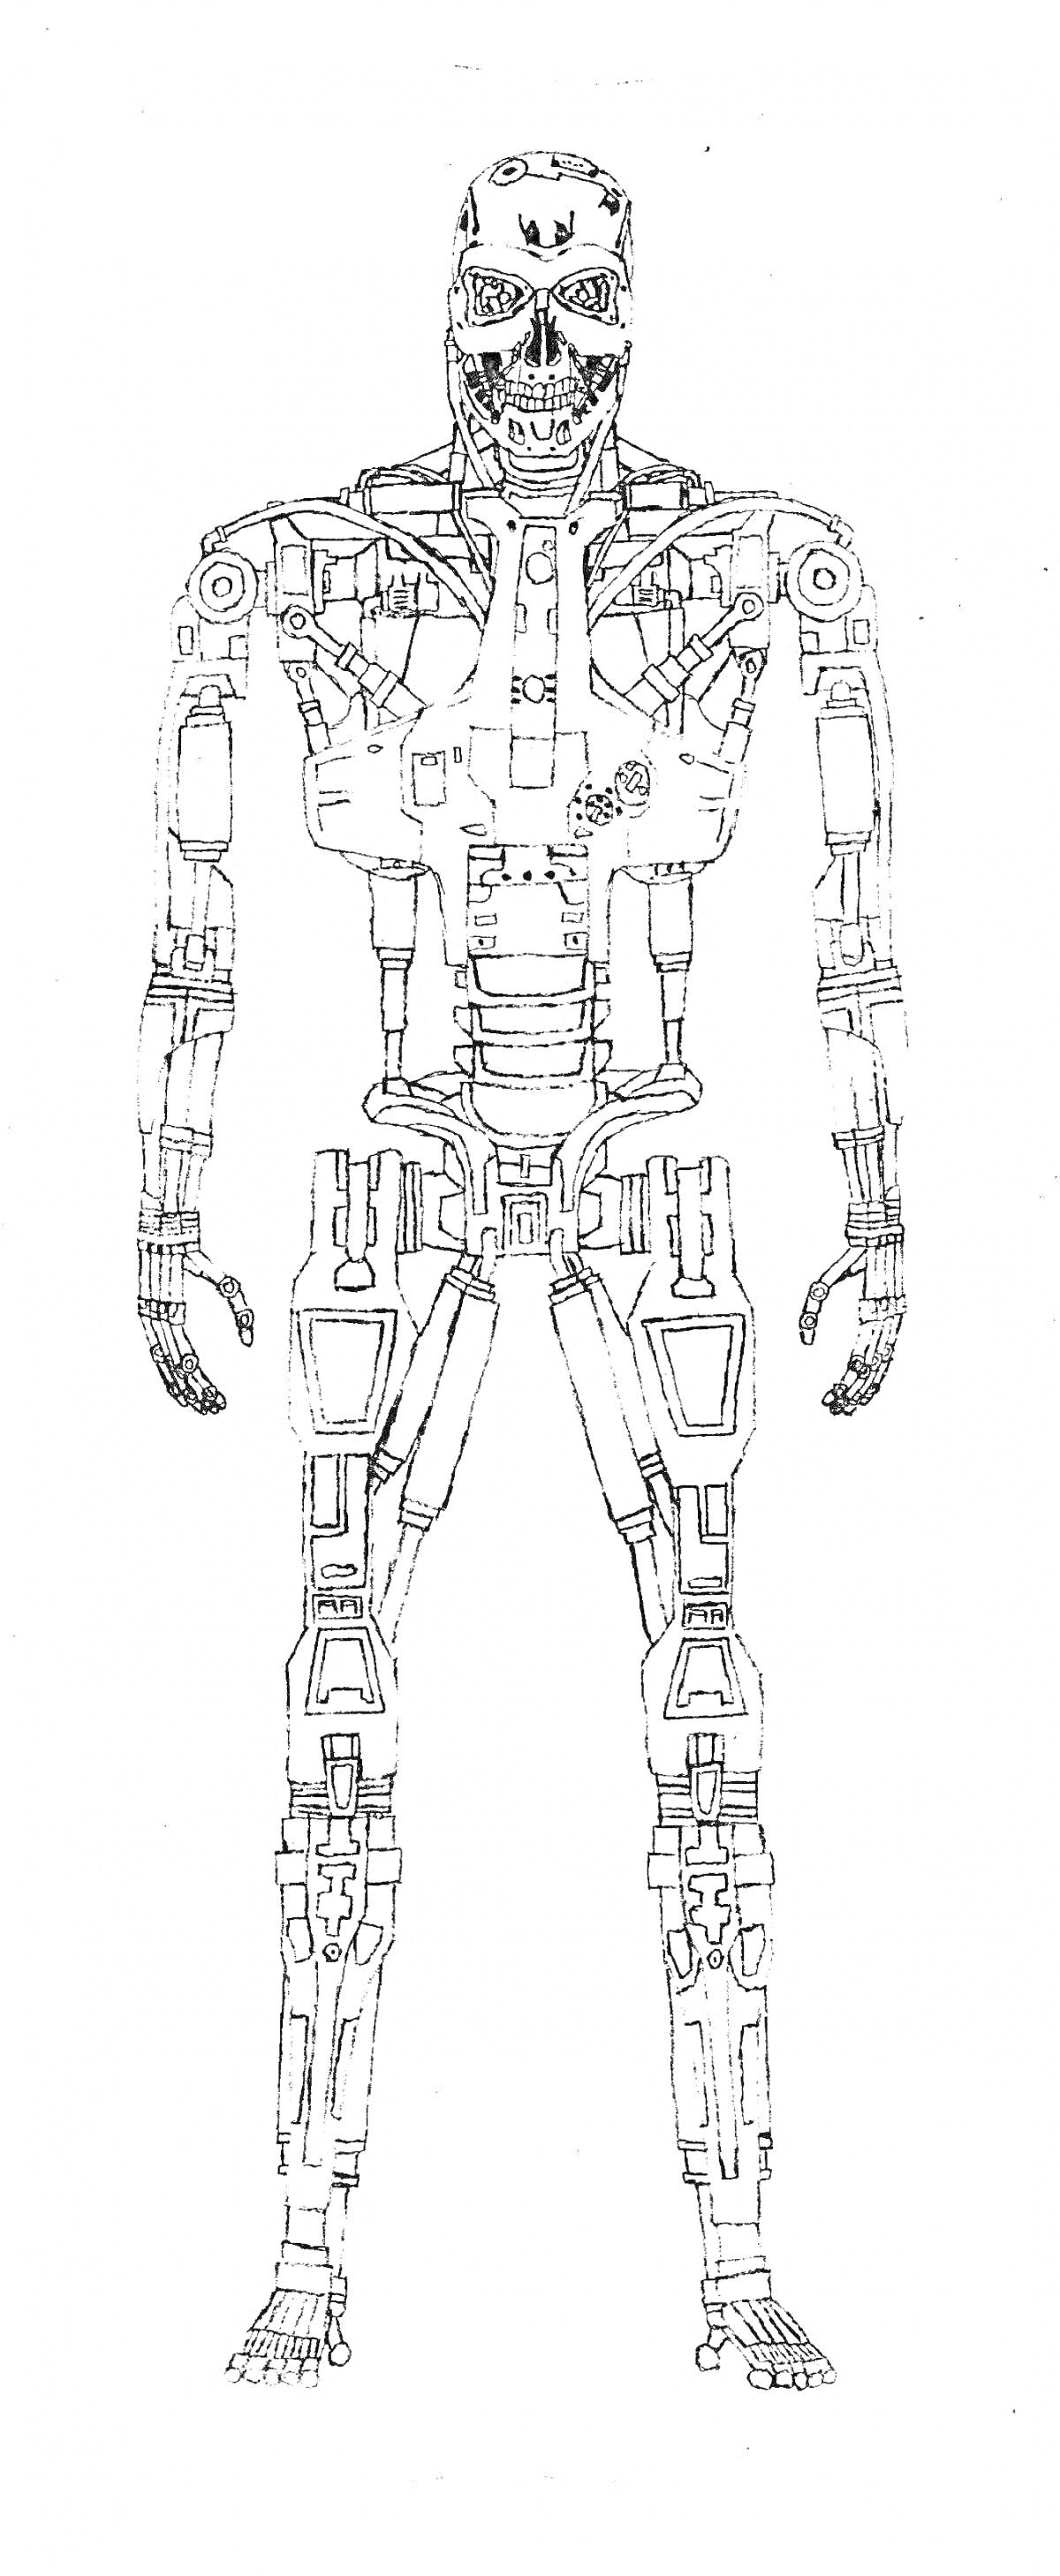 Раскраска робот-гуманоид с механическими компонентами и металлическим скелетом